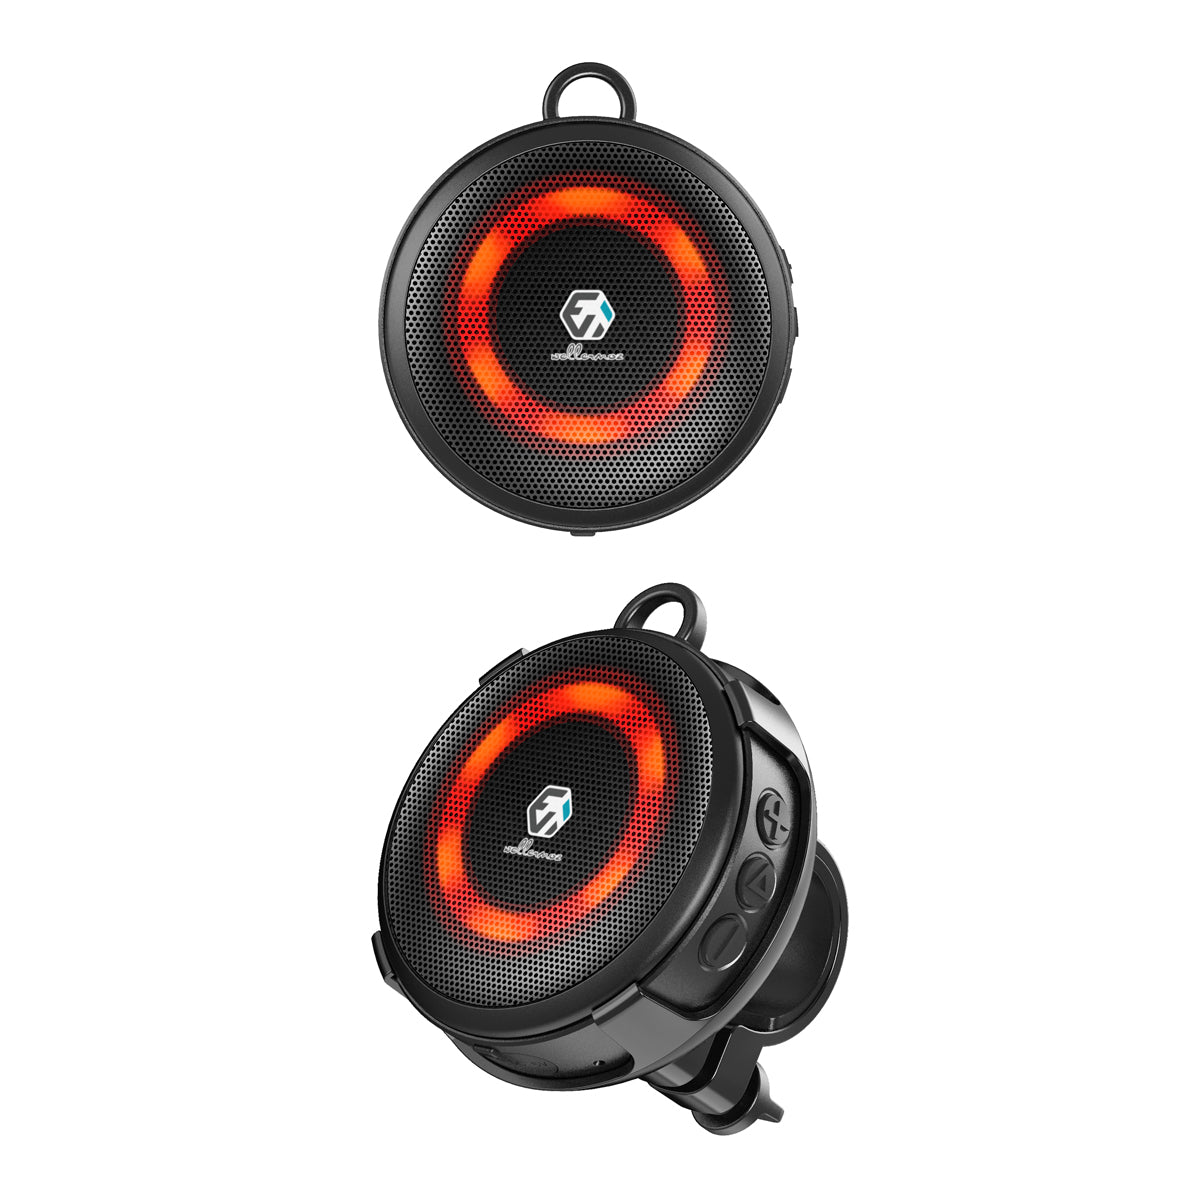 Wellermoz Bluetooth Speaker With RGB Lighting